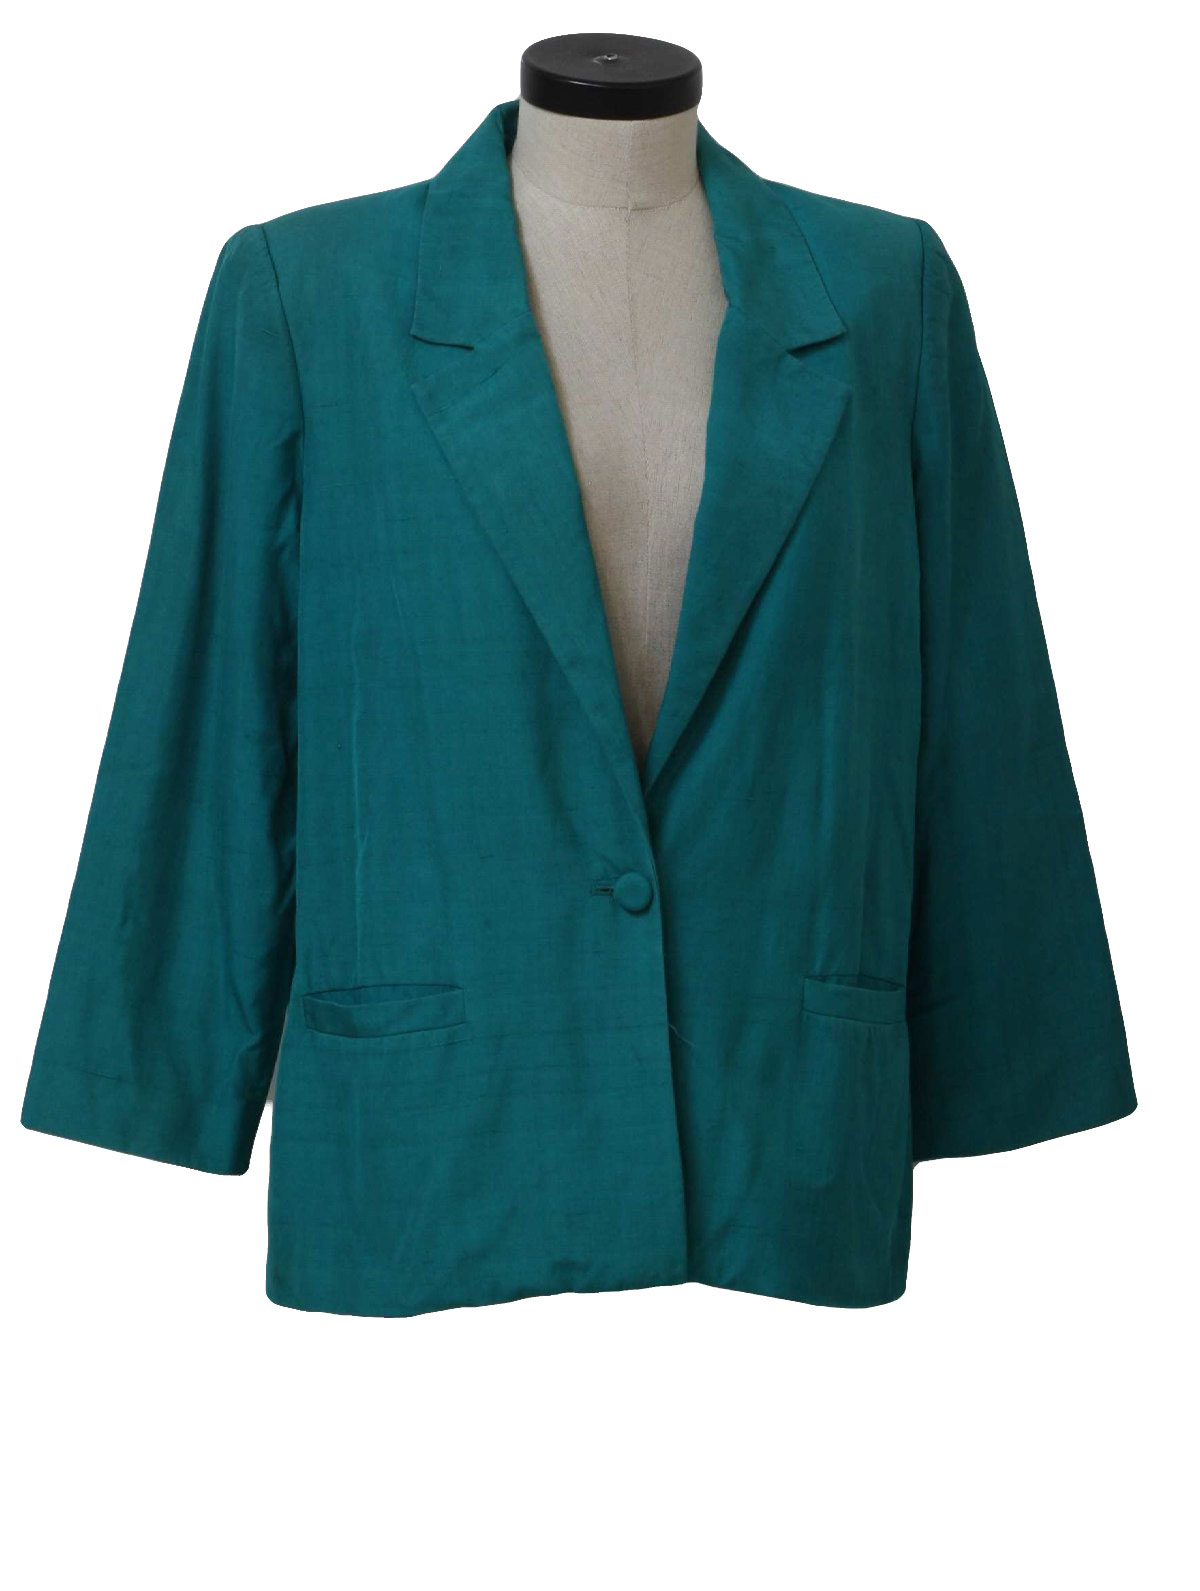 80s Retro Jacket: 80s -Evan Picone Petites- Womens teal silk with ...